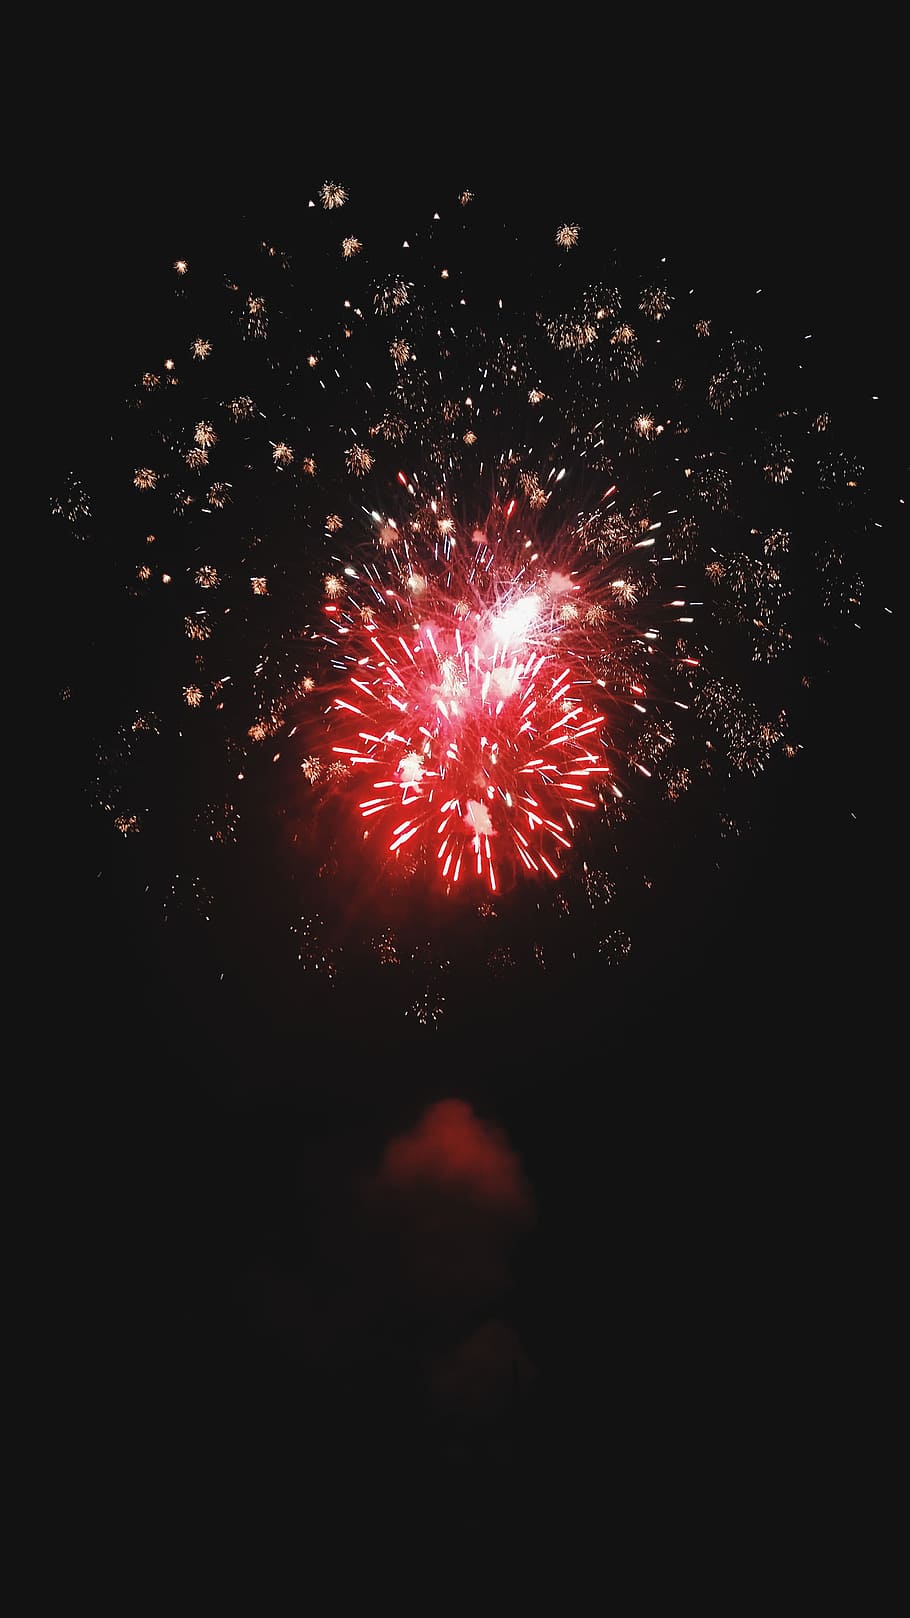 Fireworks, Celebration, Holiday, sky, celebrate, event, explosion, festival, festive, red